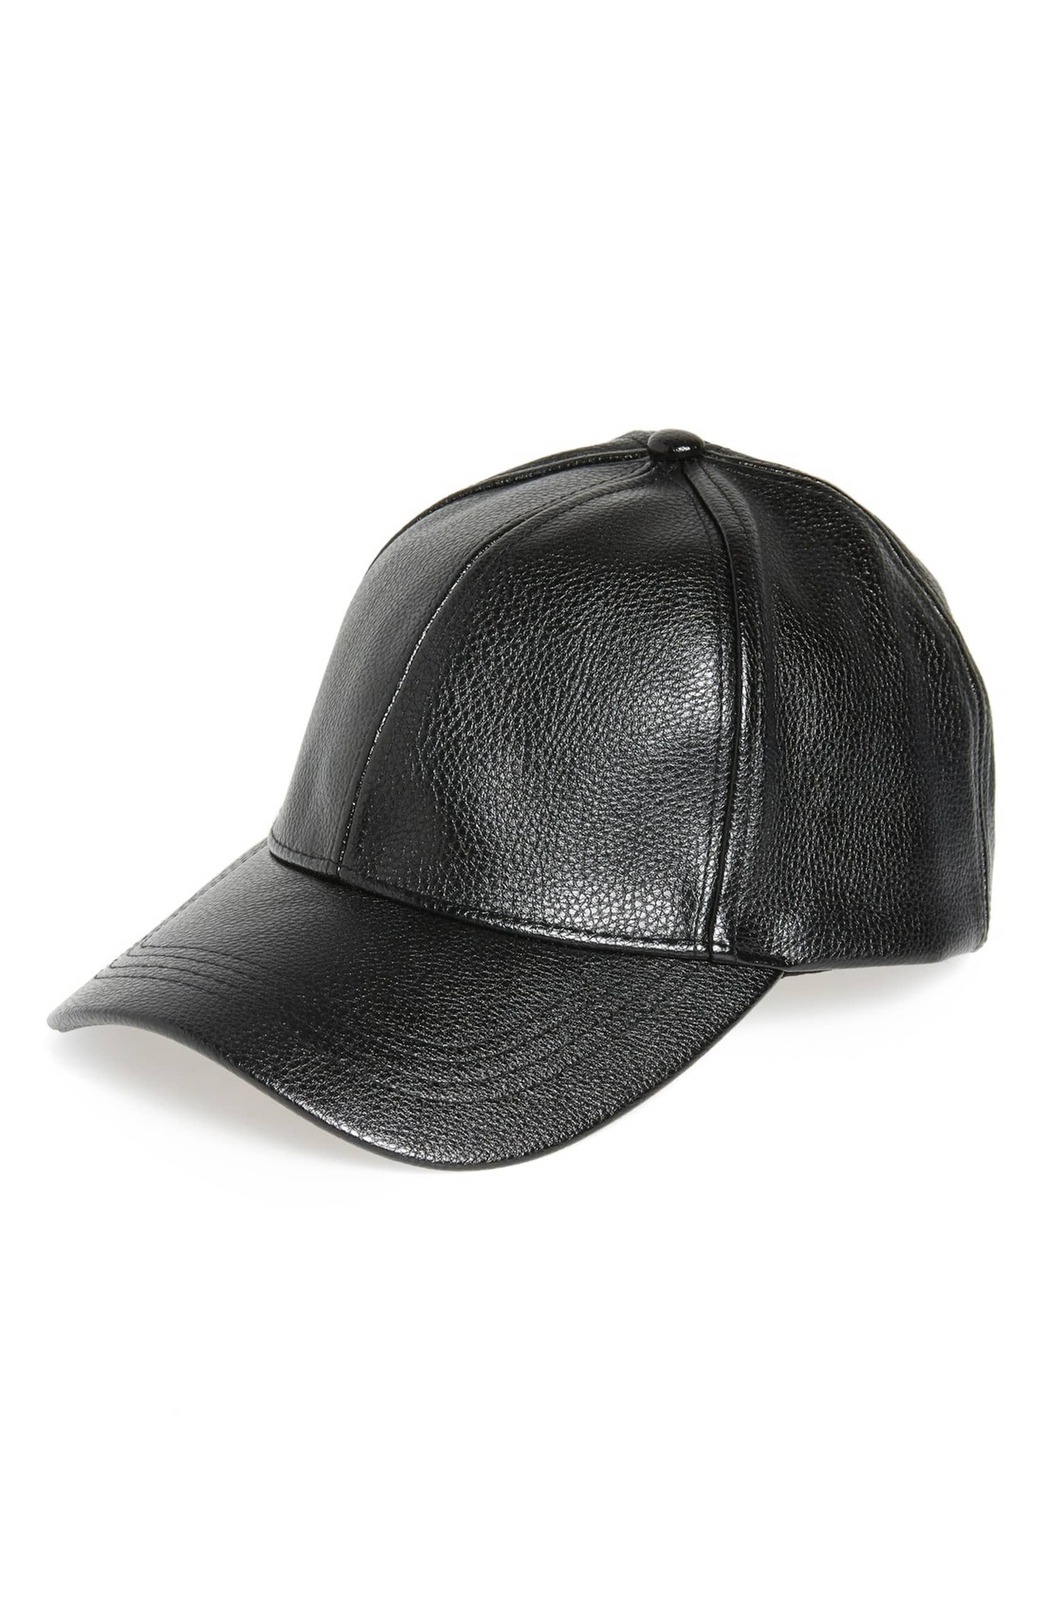 D&Y Women's Black Faux Leather Adjustable Baseball Cap - Hats